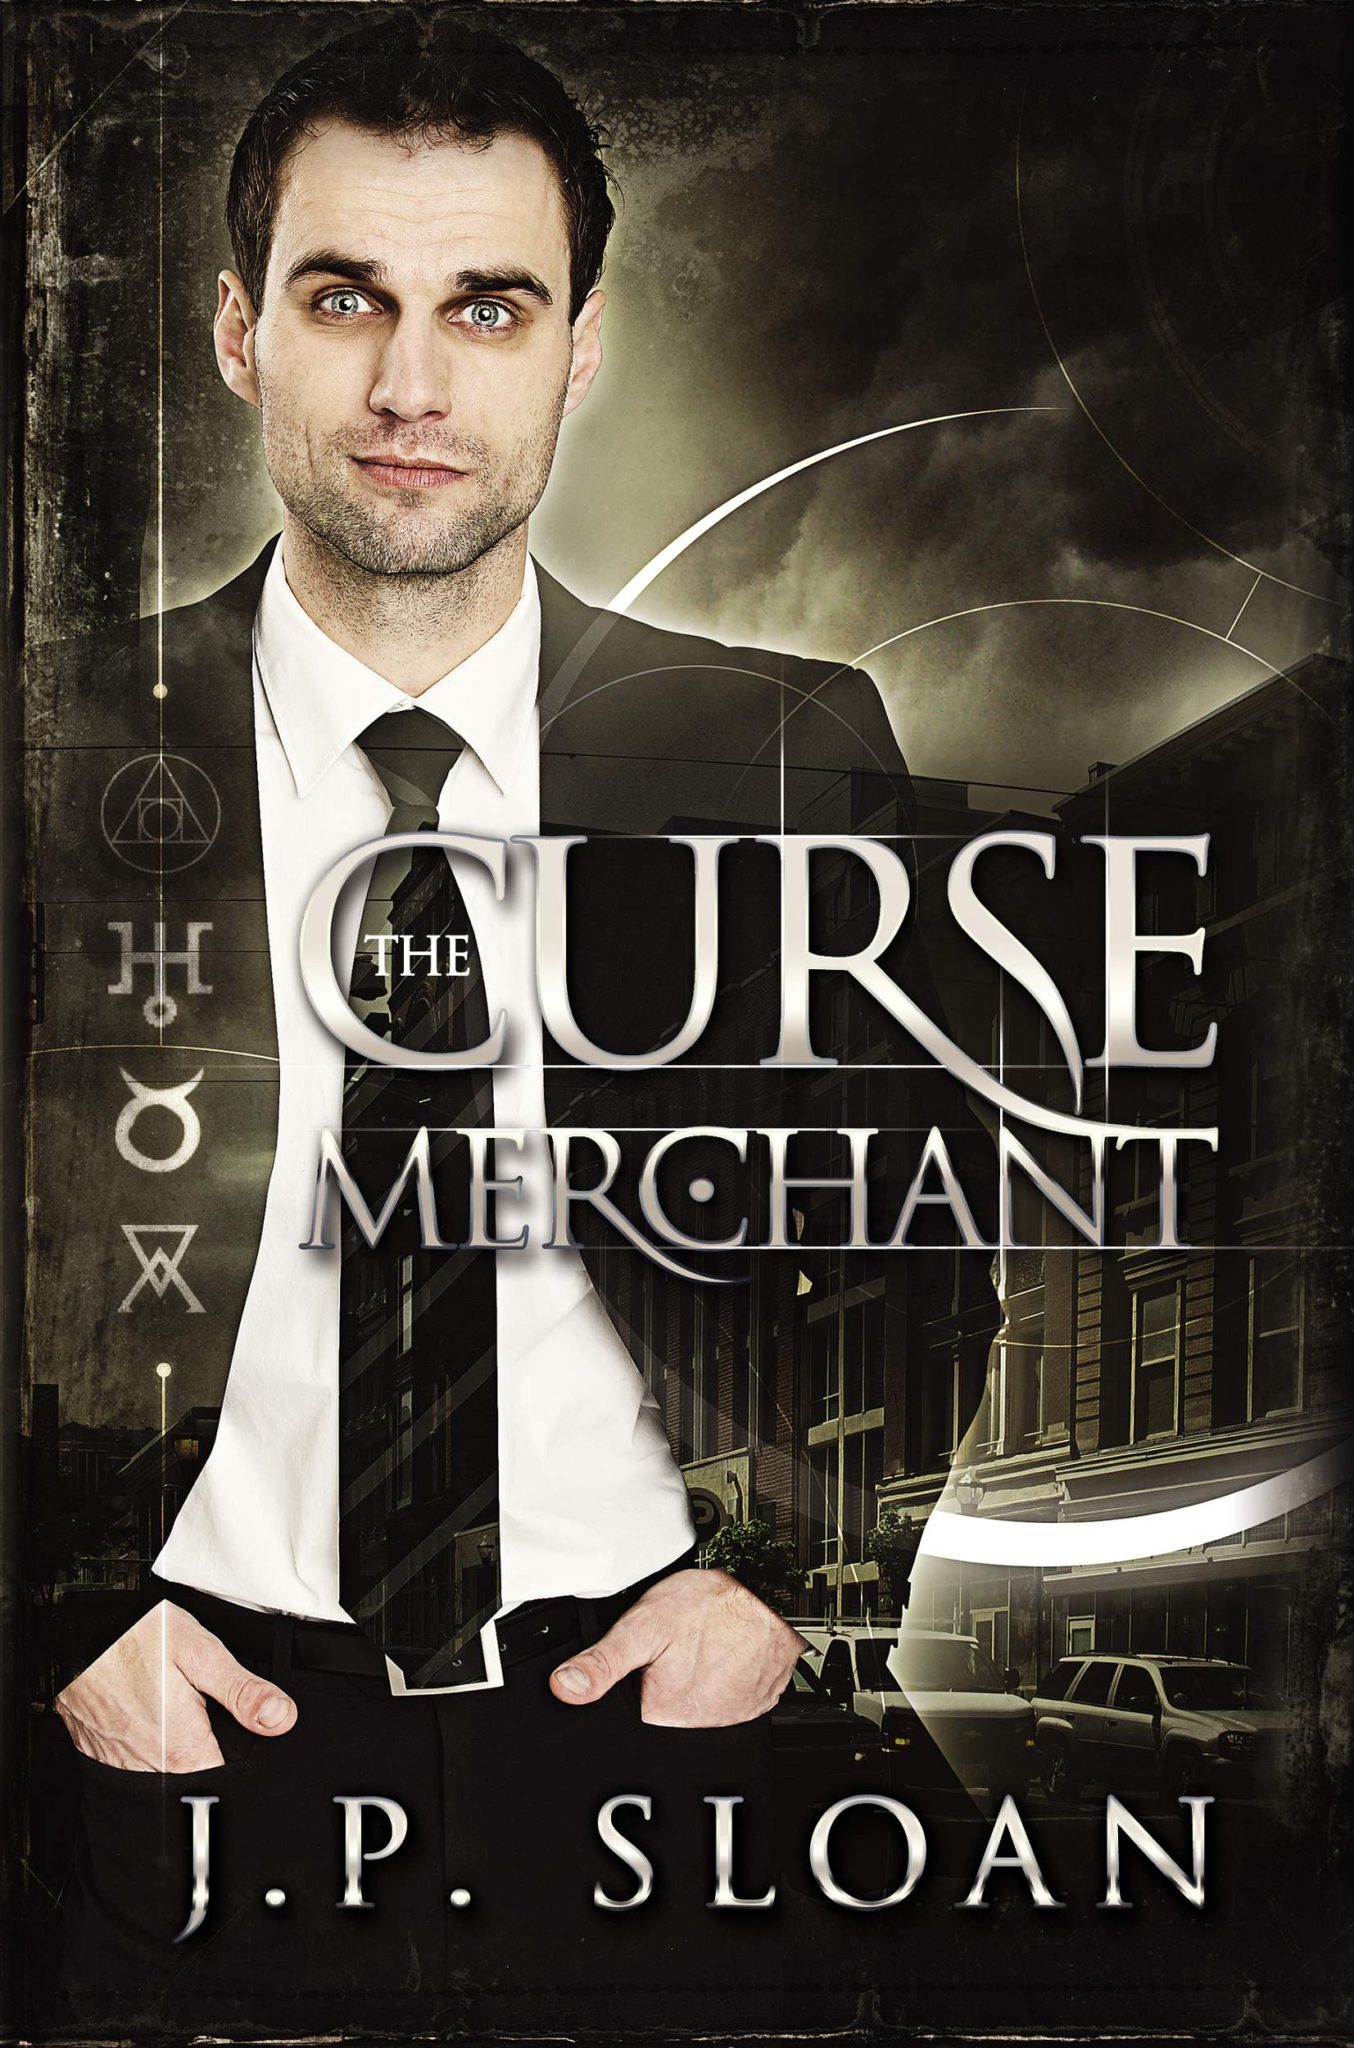 FREE: The Curse Merchant by J. P. Sloan